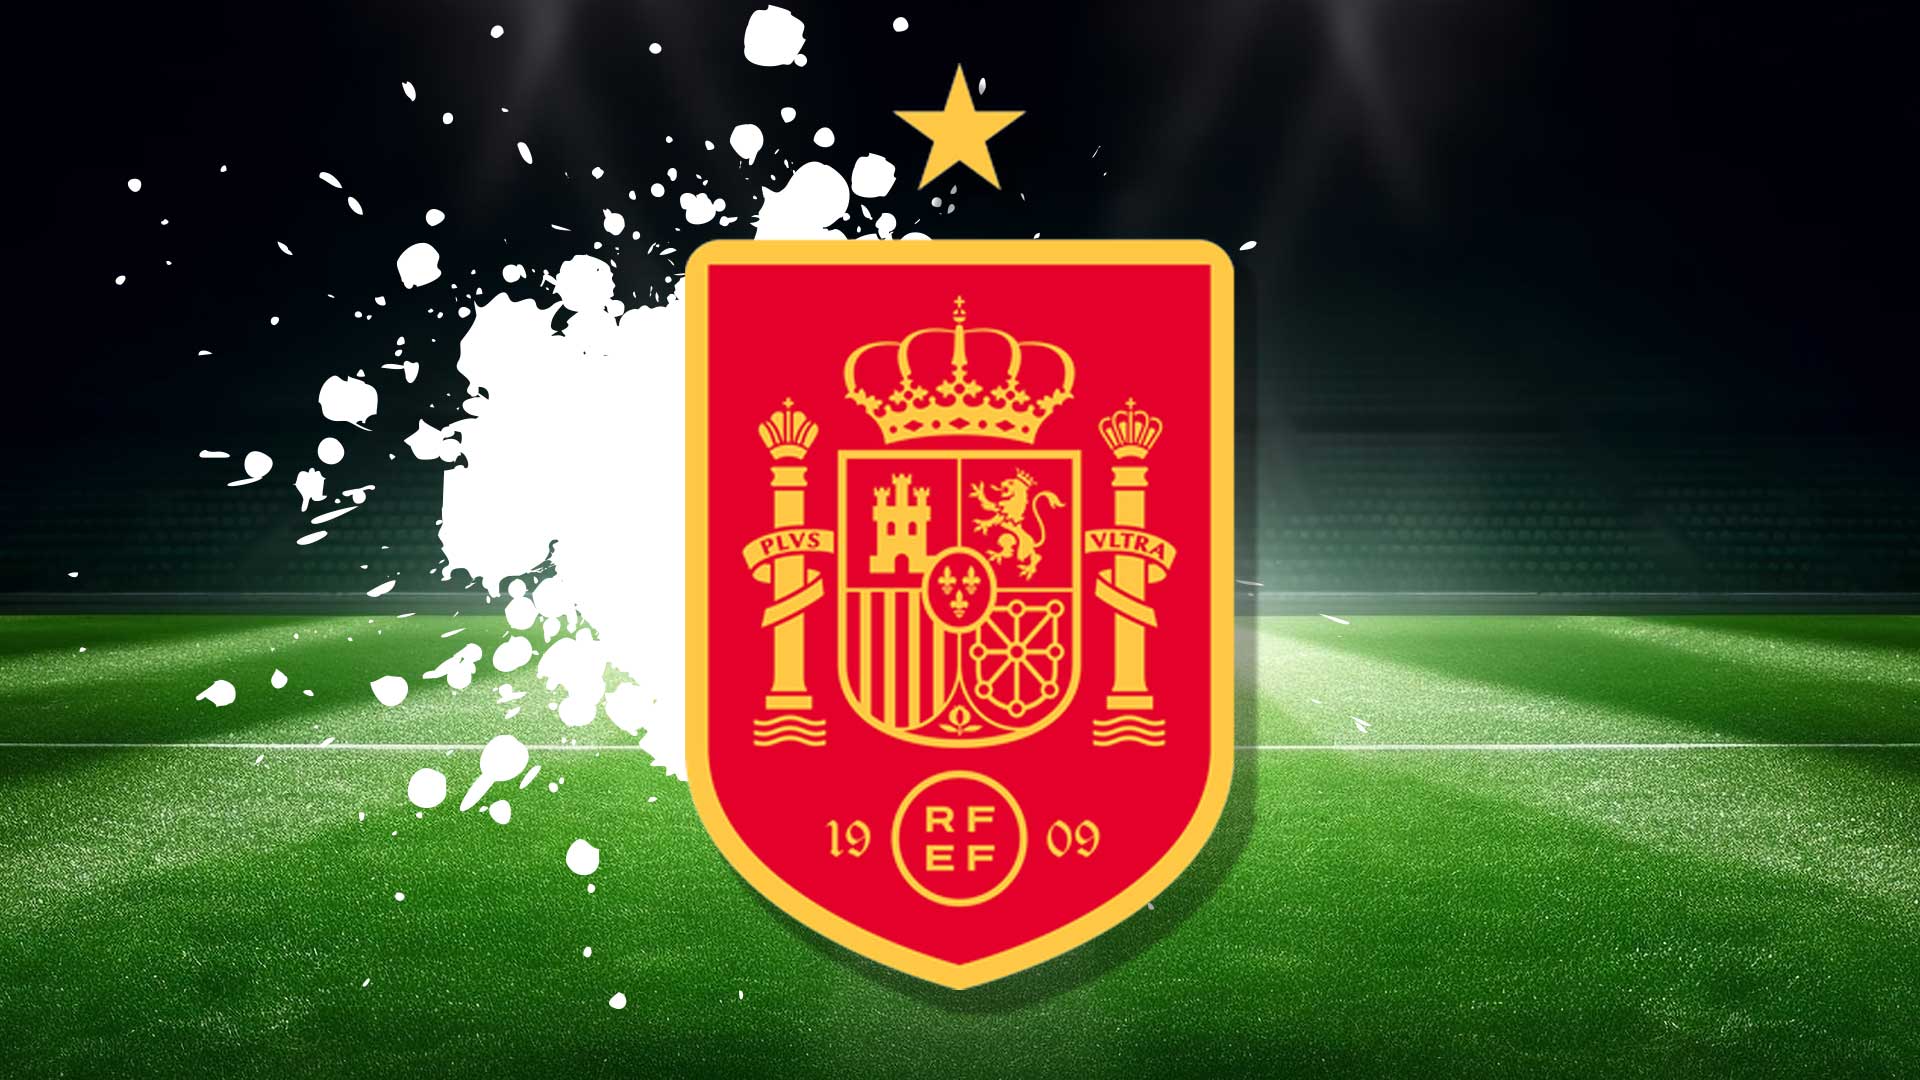 The Spanish national football team badge